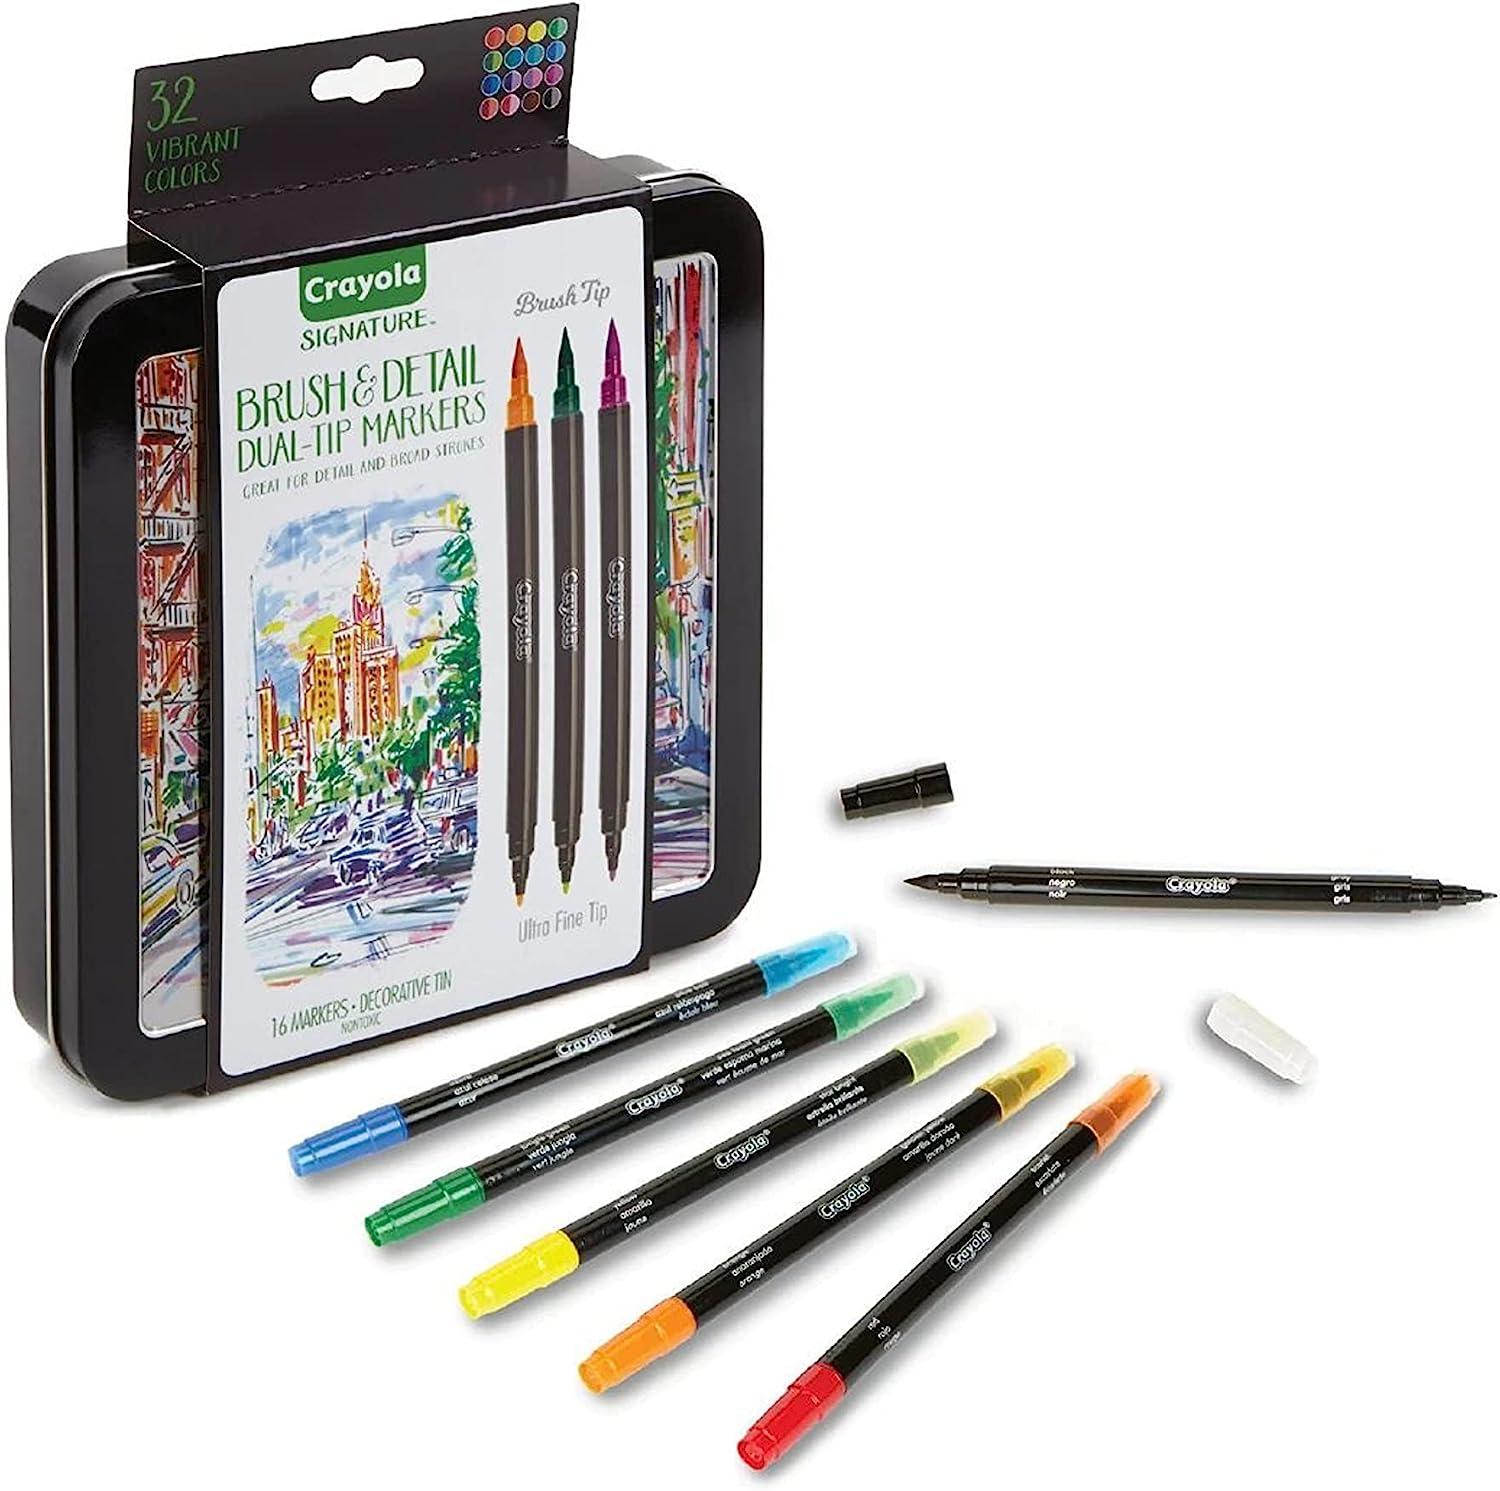 crayola brush detail dual tip marker set ?58 6501 crayola b0722ylzty